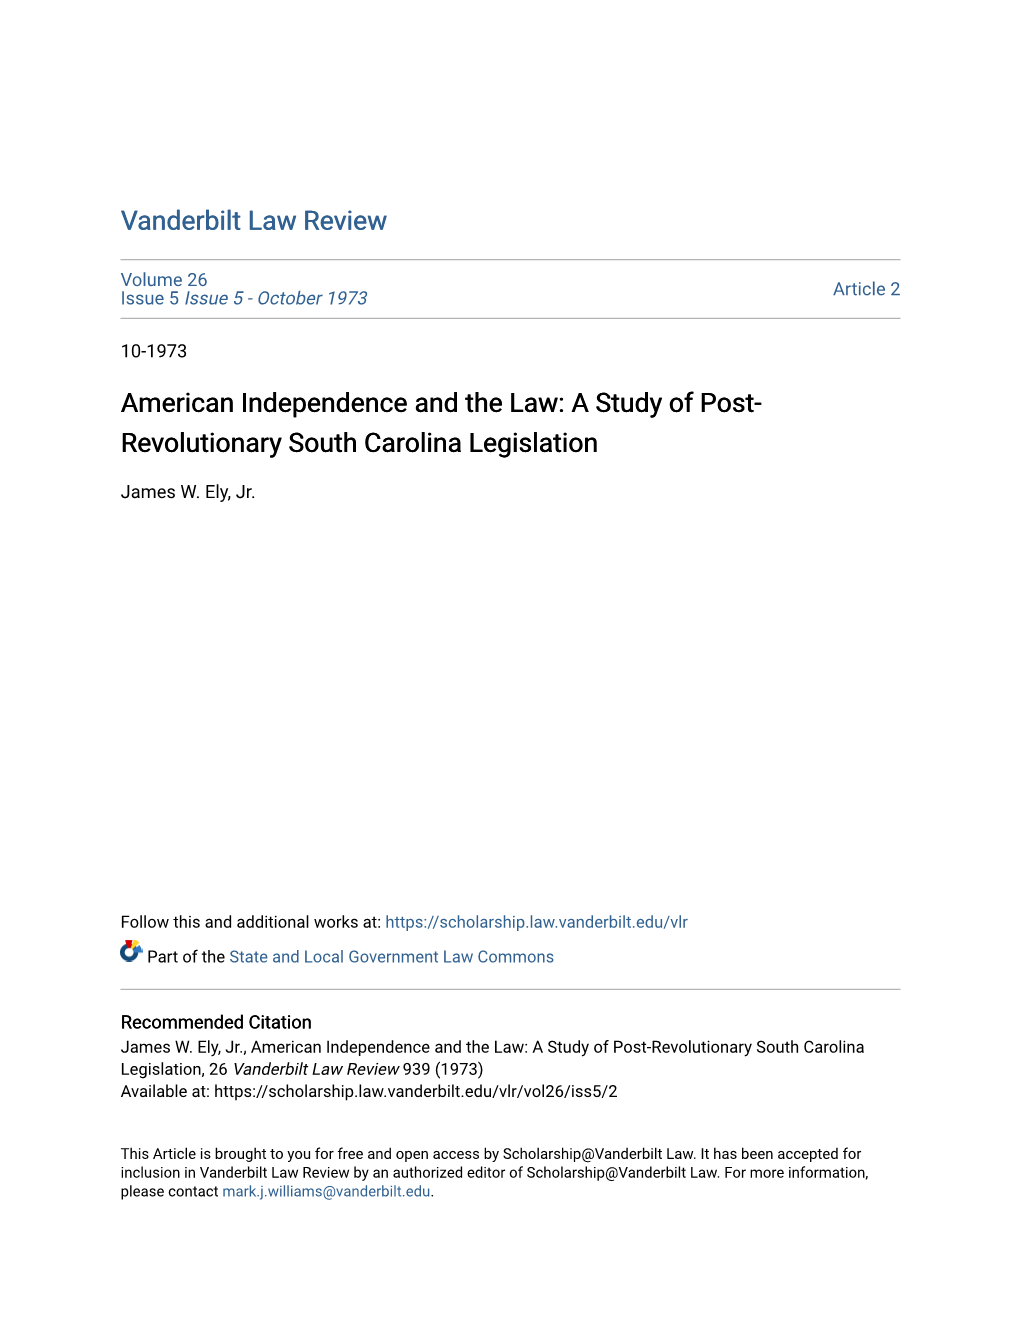 A Study of Post-Revolutionary South Carolina Legislation, 26 Vanderbilt Law Review 939 (1973) Available At